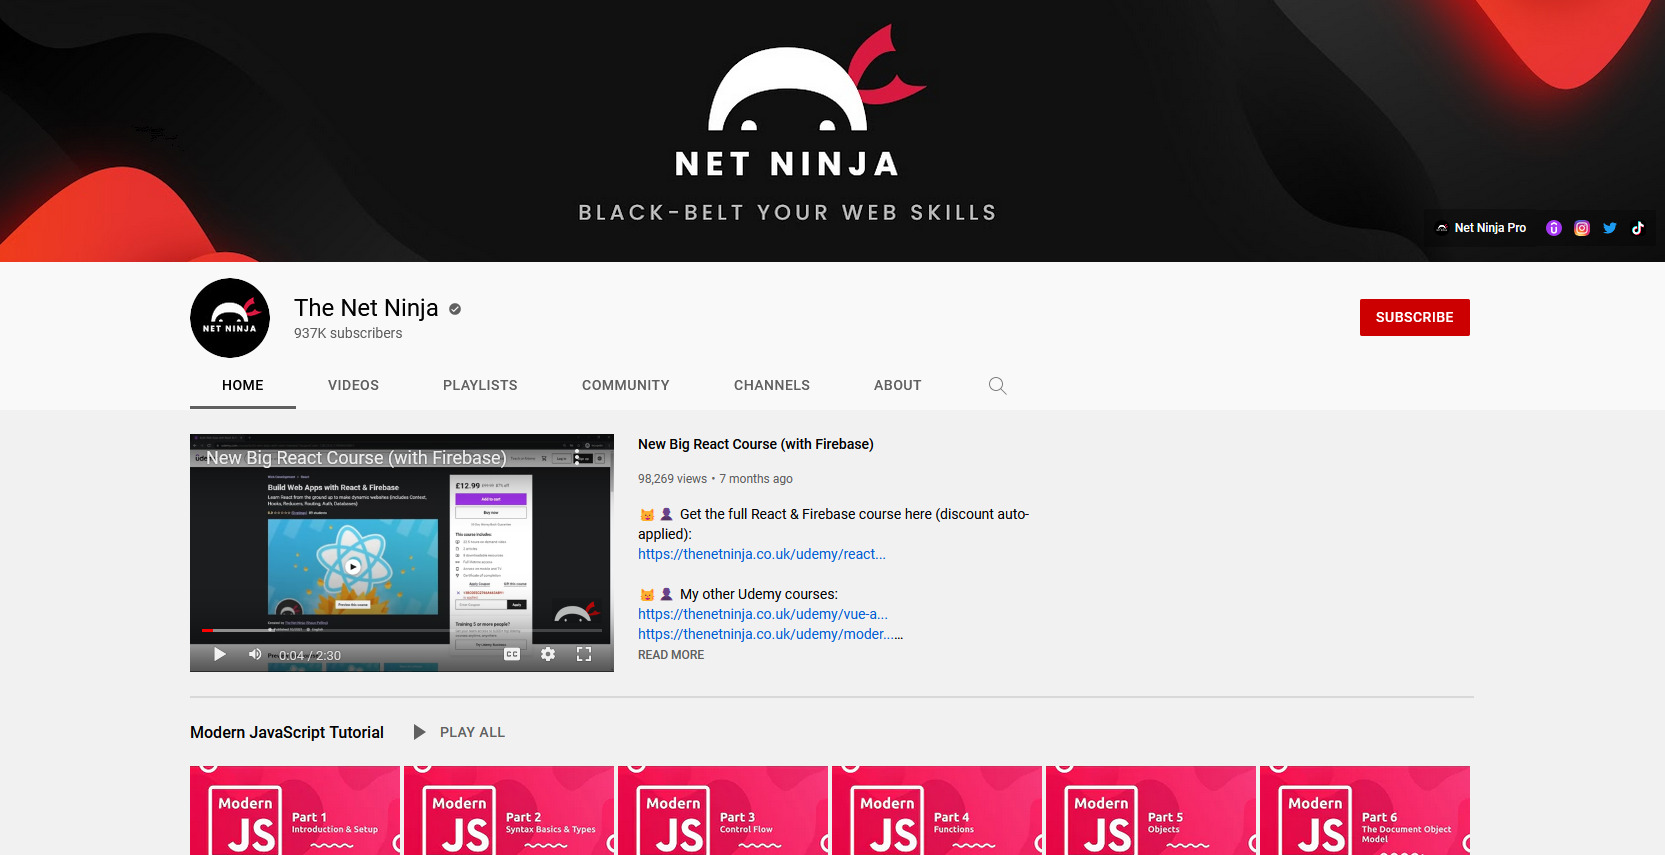 The Net Ninja